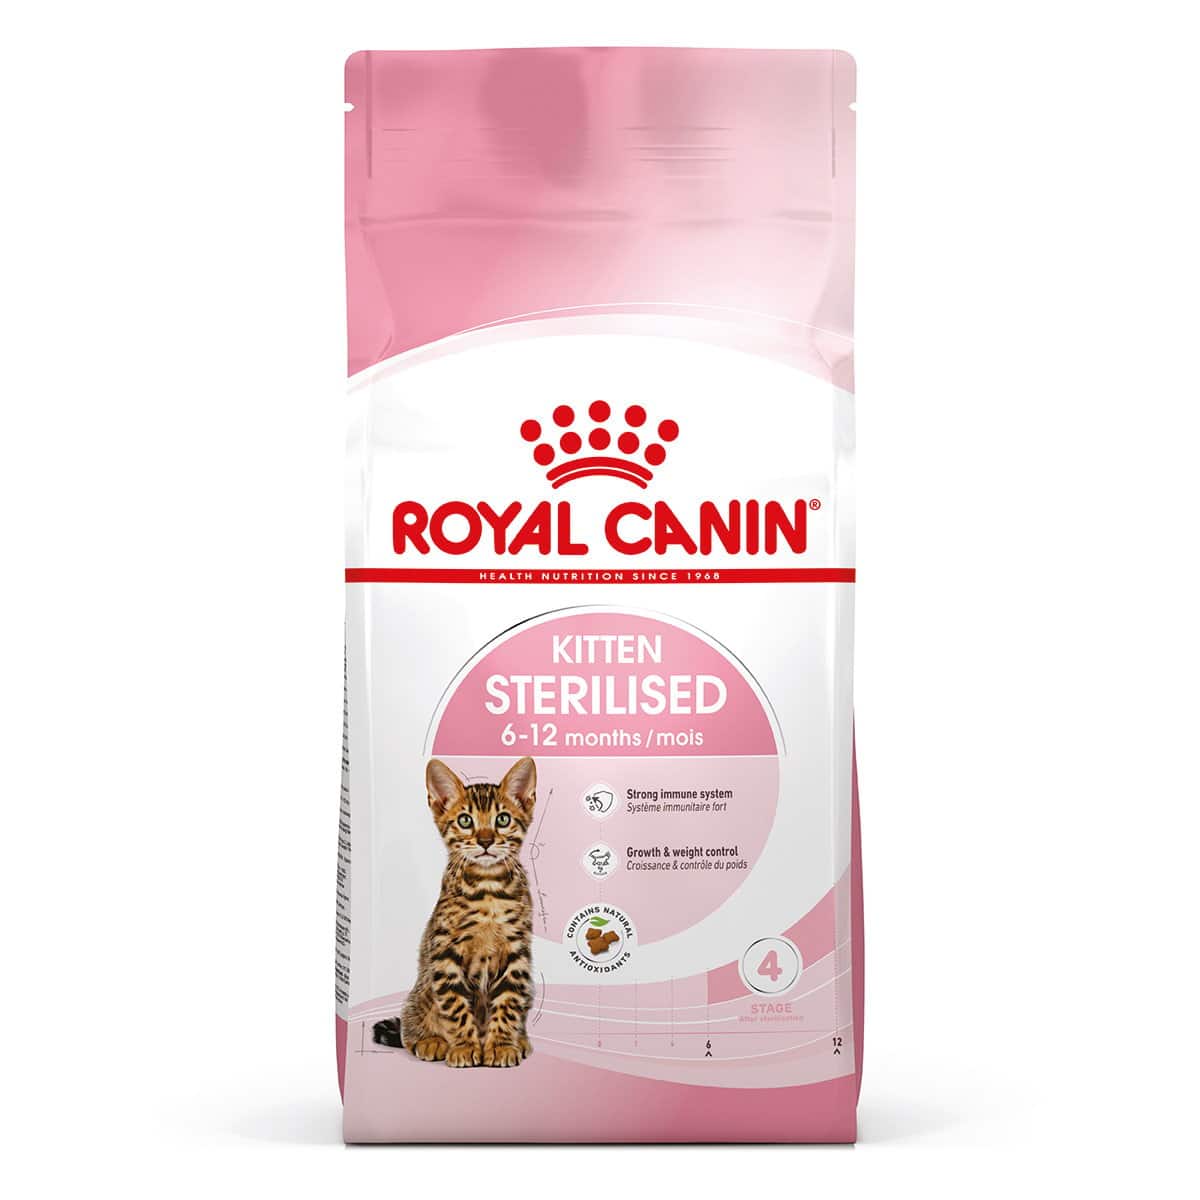 ROYAL CANIN KITTEN Sterilised Kittenfutter für kastrierte Kätzchen 3